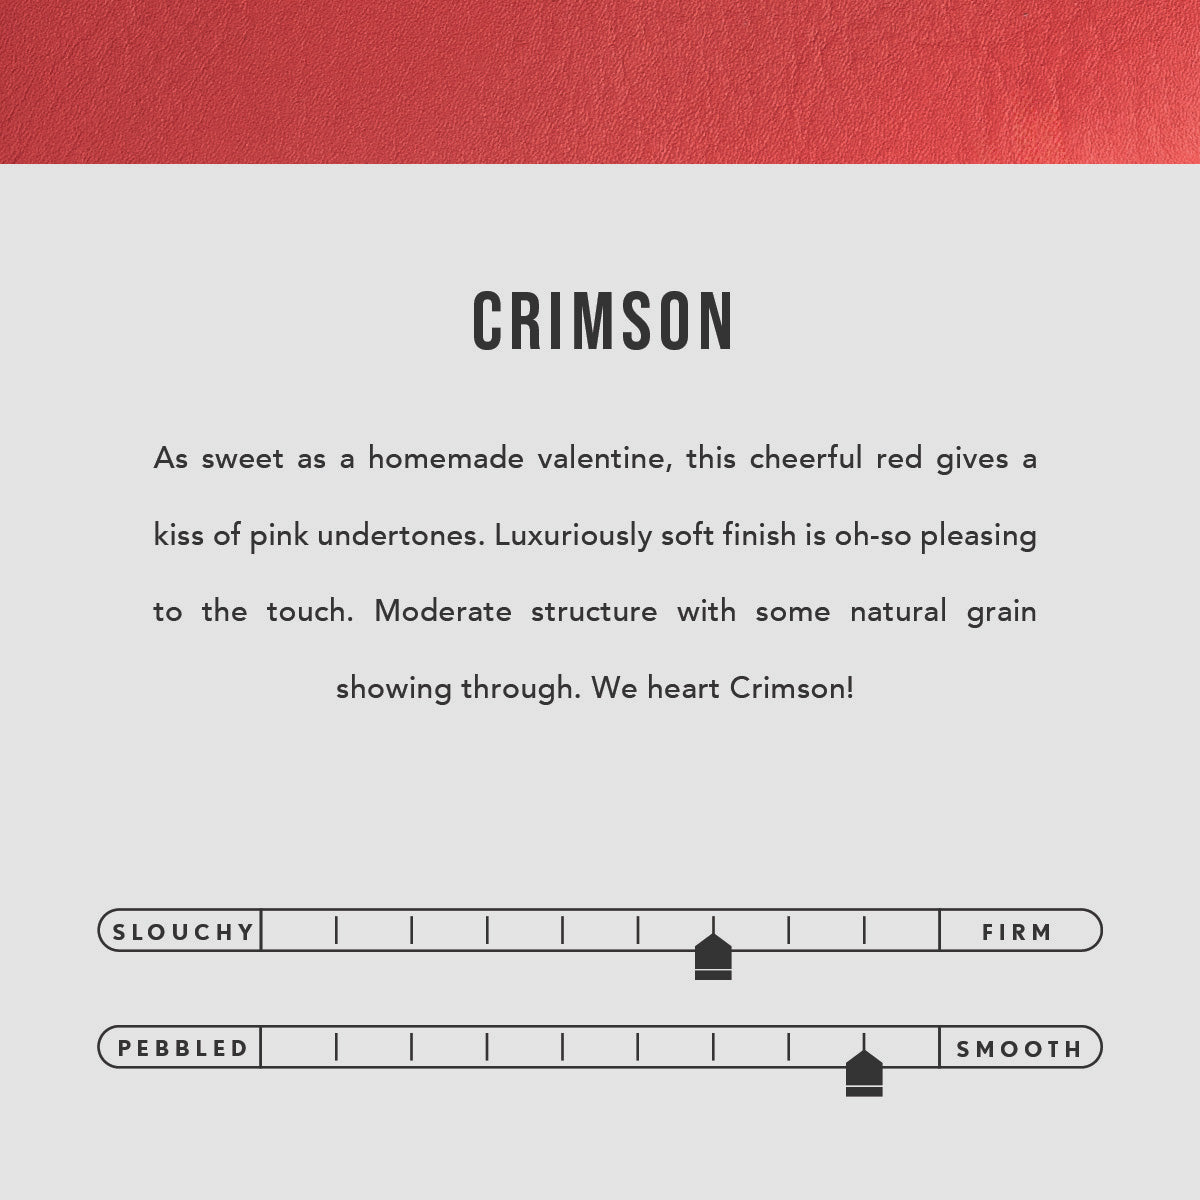 Crimson | infographic